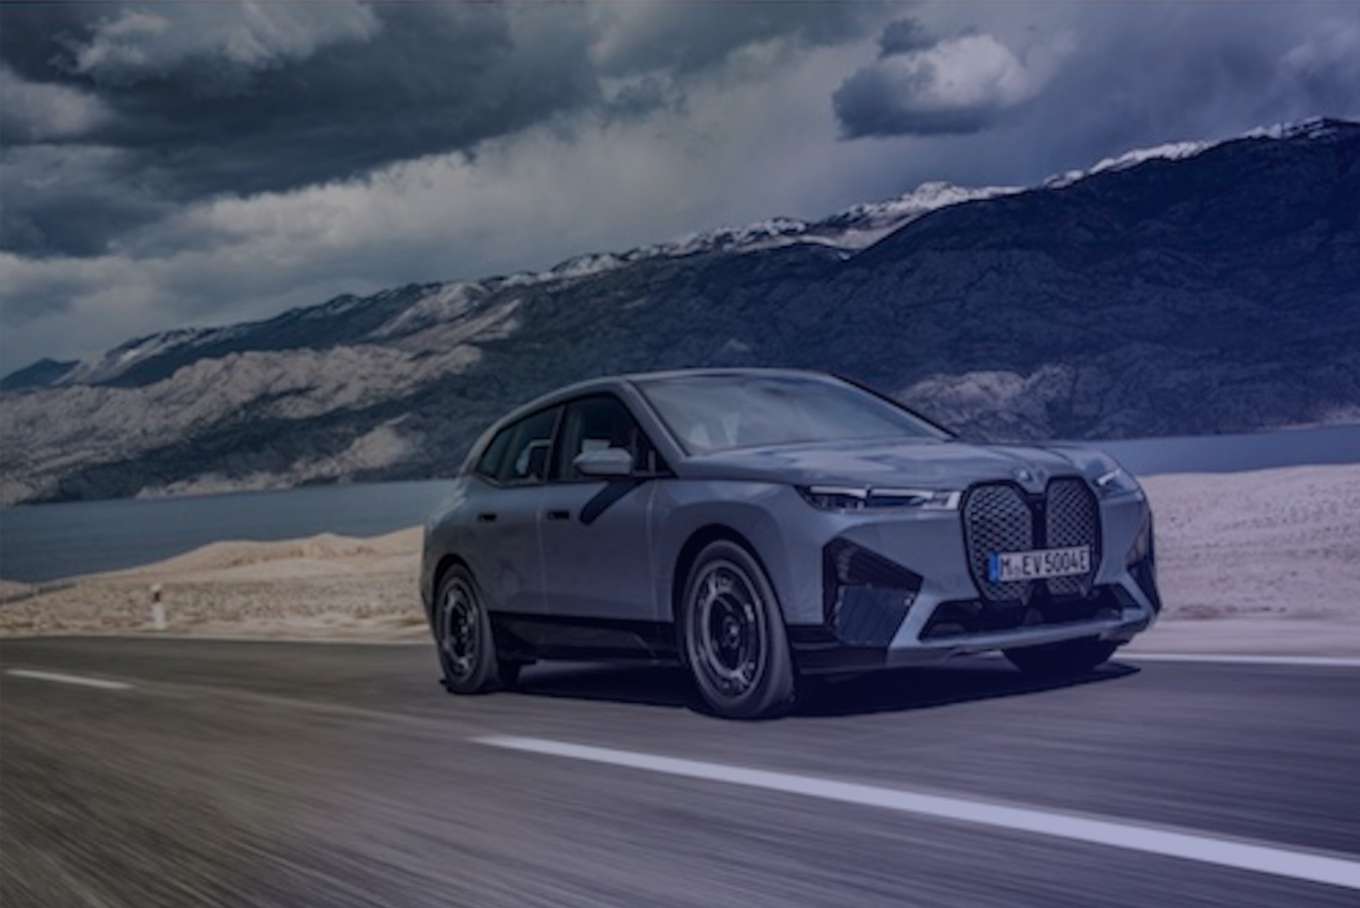 BMW – Task Force Lead
Automotive